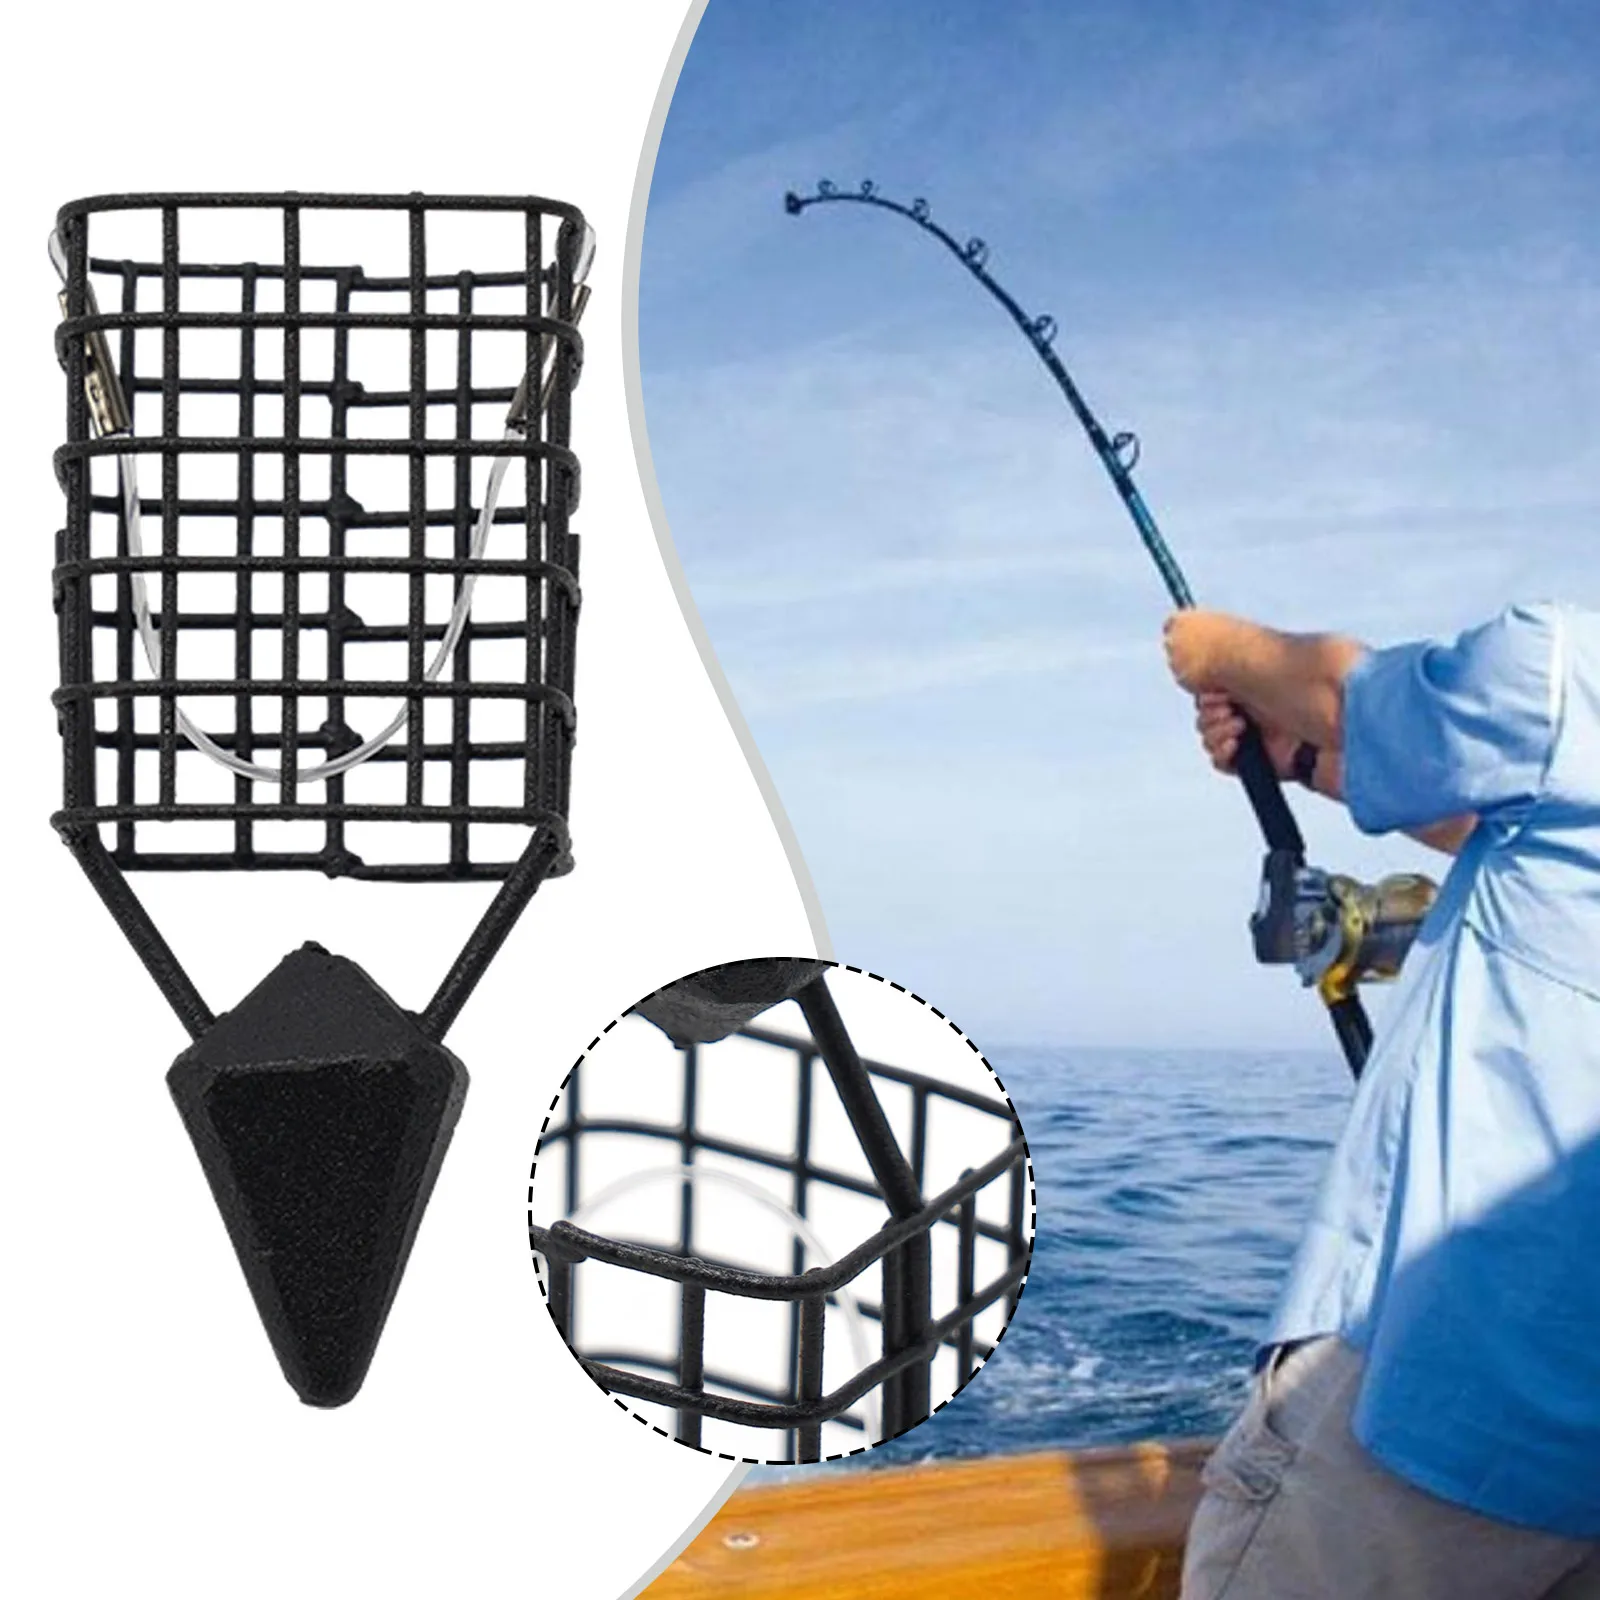  10Pcs/Pk Carp Fishing Bait Trap Cage Feeder Basket Holder  Coarse Lure Feeder Carp Fishing Tackle Kit,Size L/M/S Available